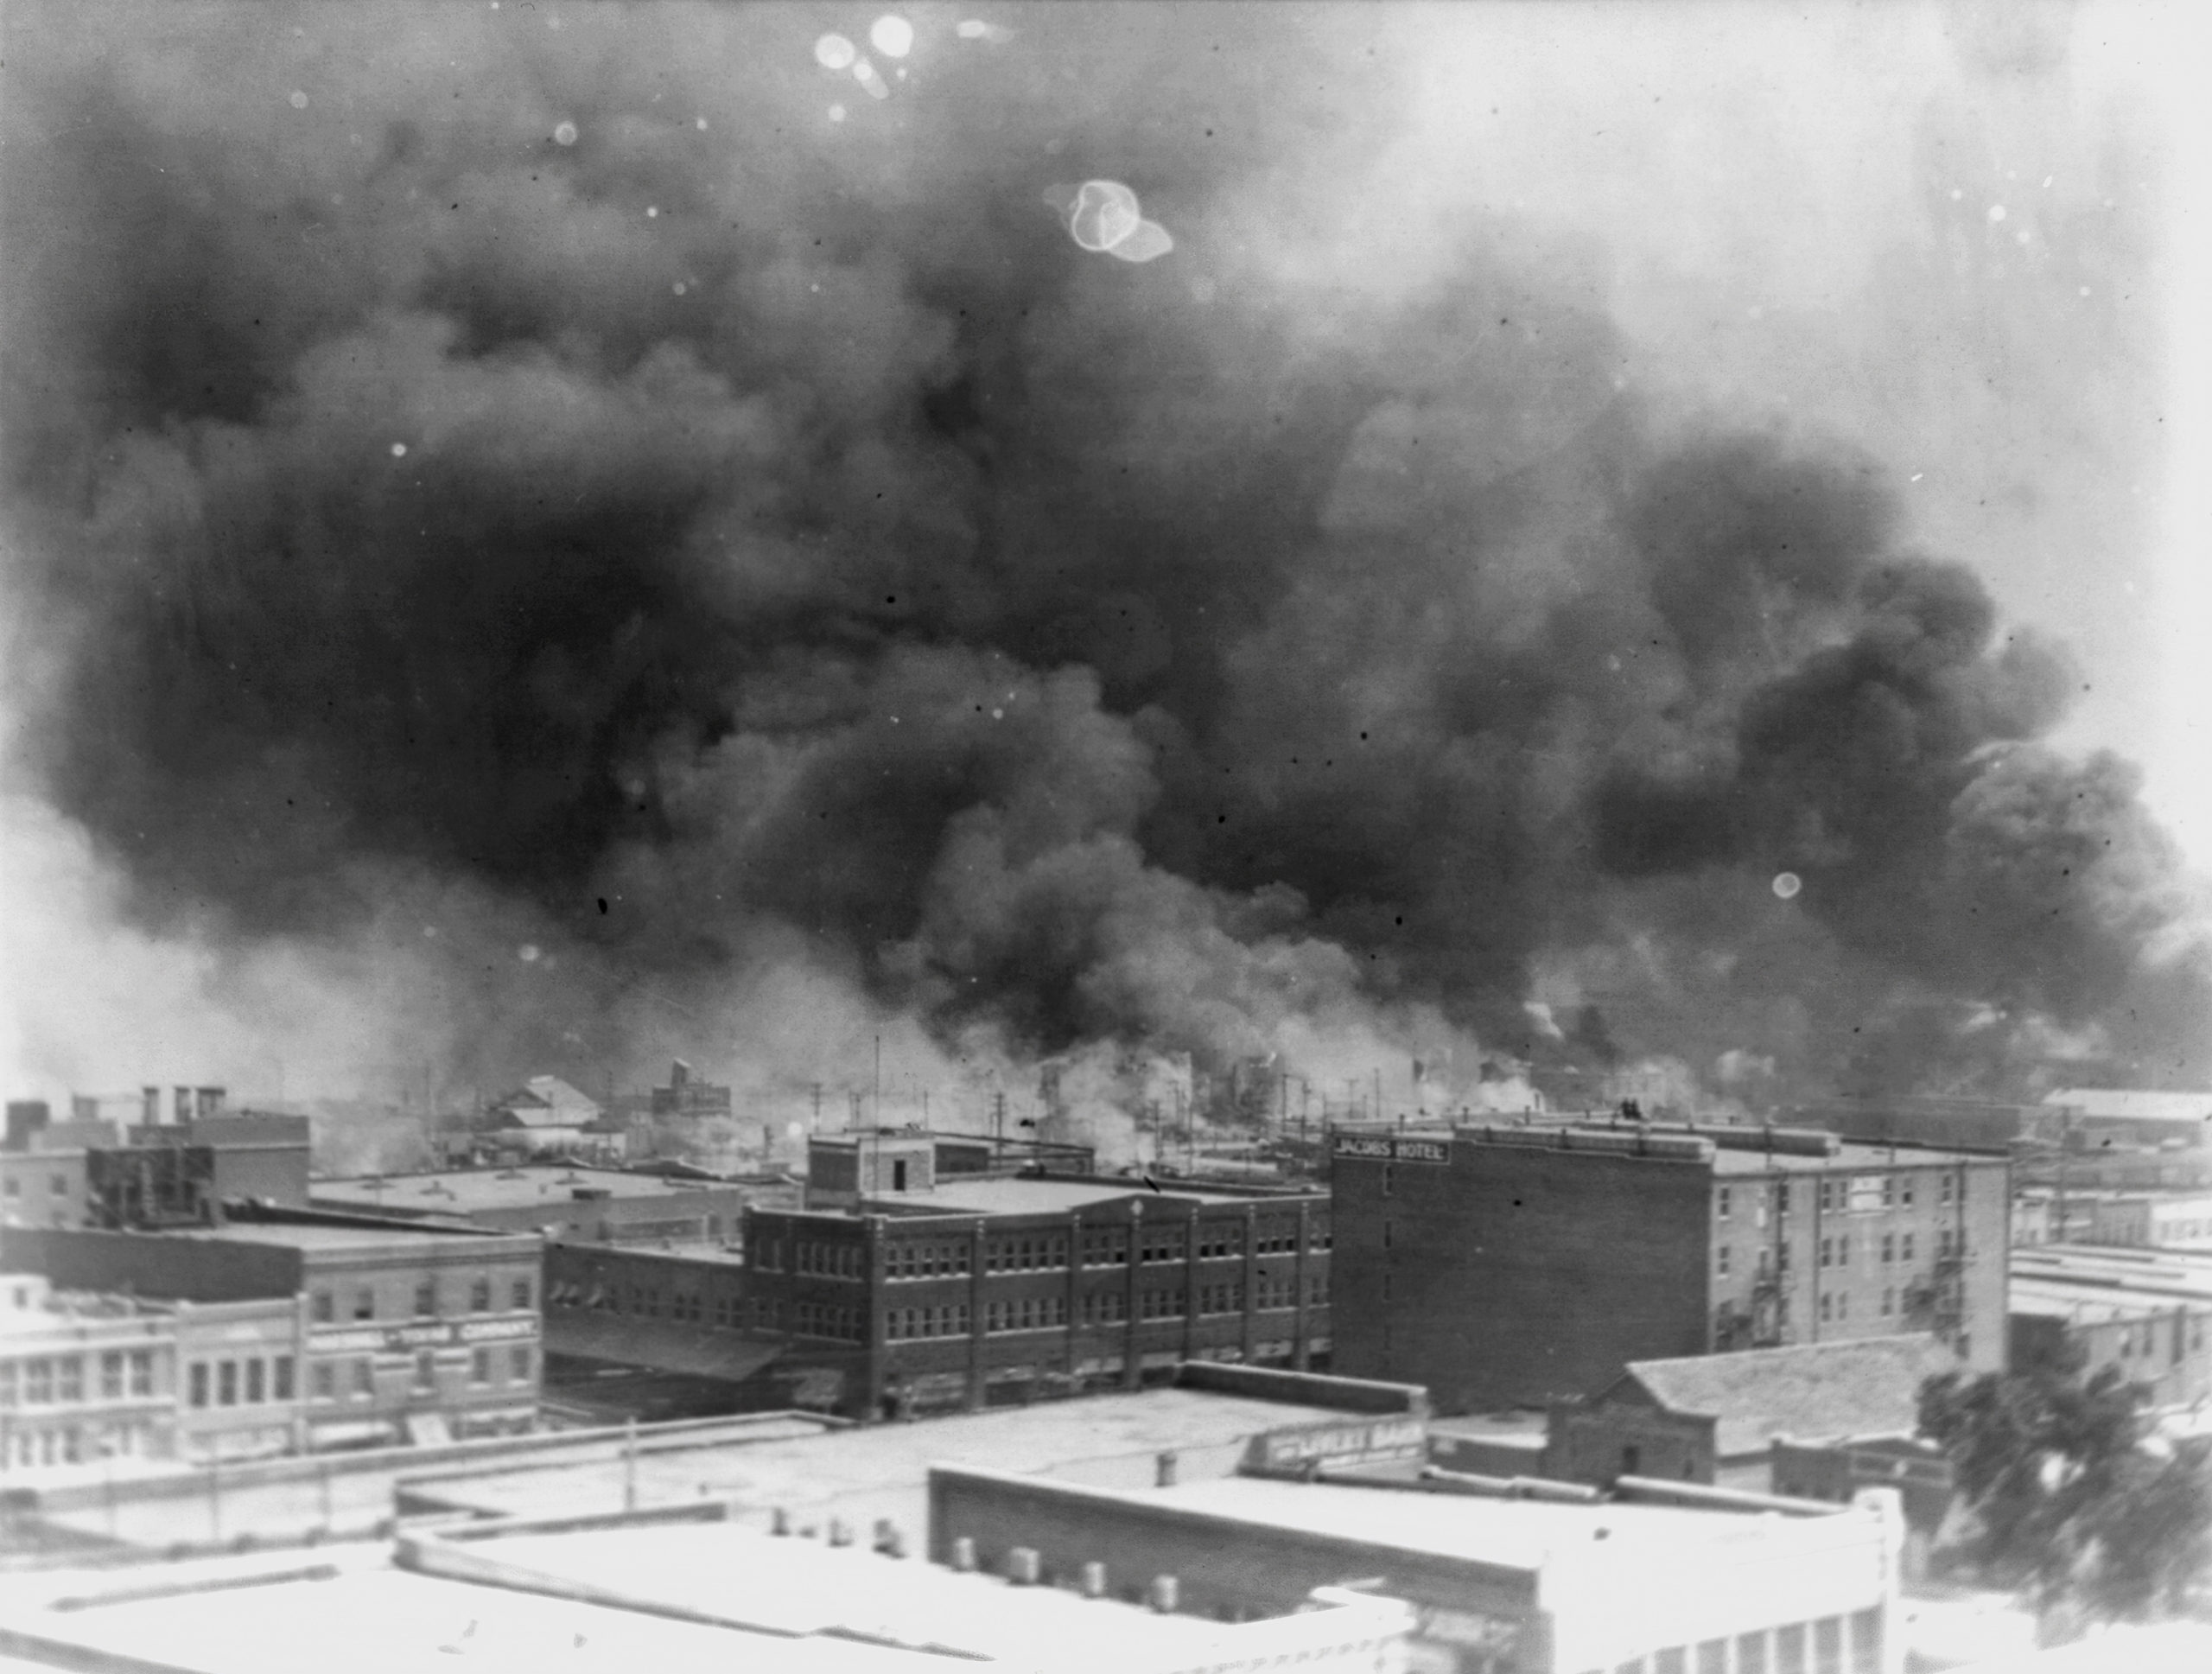 In this 1921 image, smoke billows over Tulsa, Oklahoma during the Tulsa Race Massacre.